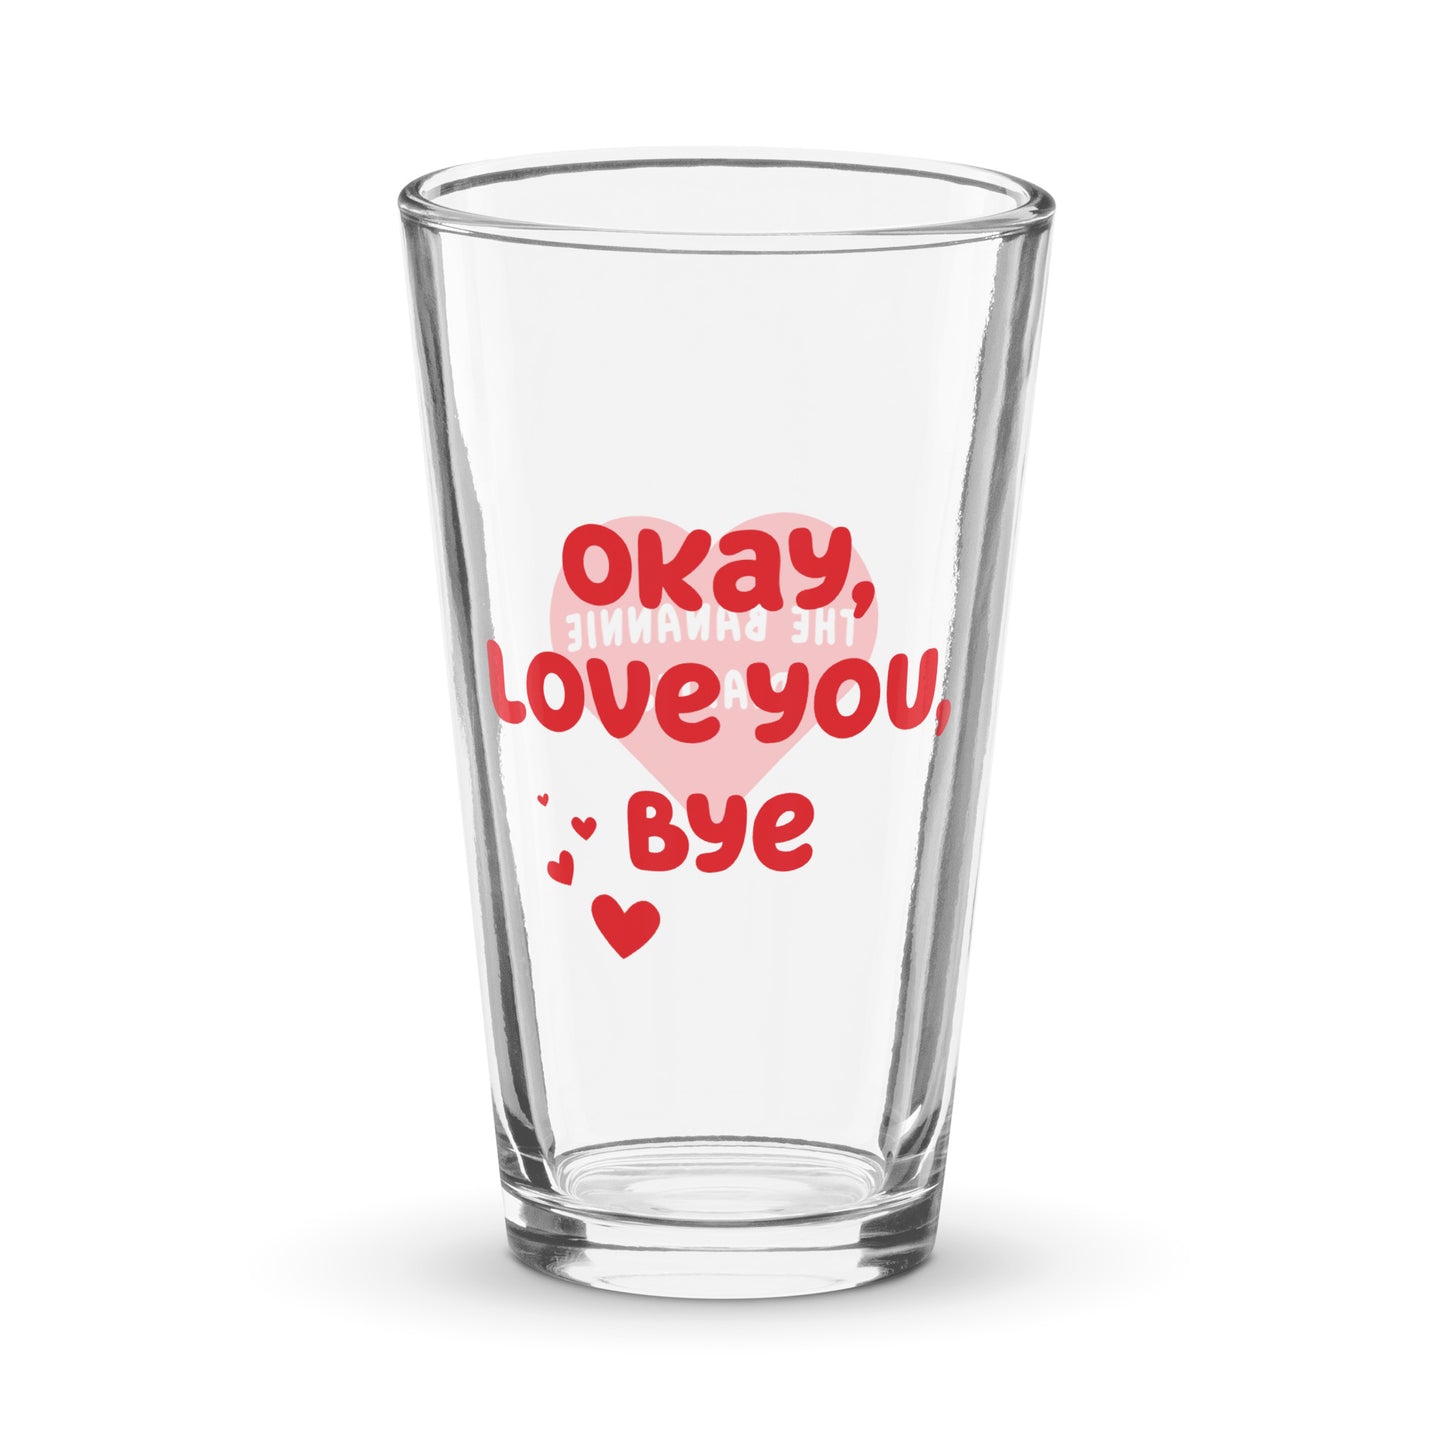 Okay, Love You, Bye - Pint Glass, by The Banannie Diaries - Volume: 16 oz. (473 ml), Glassware, Houseware